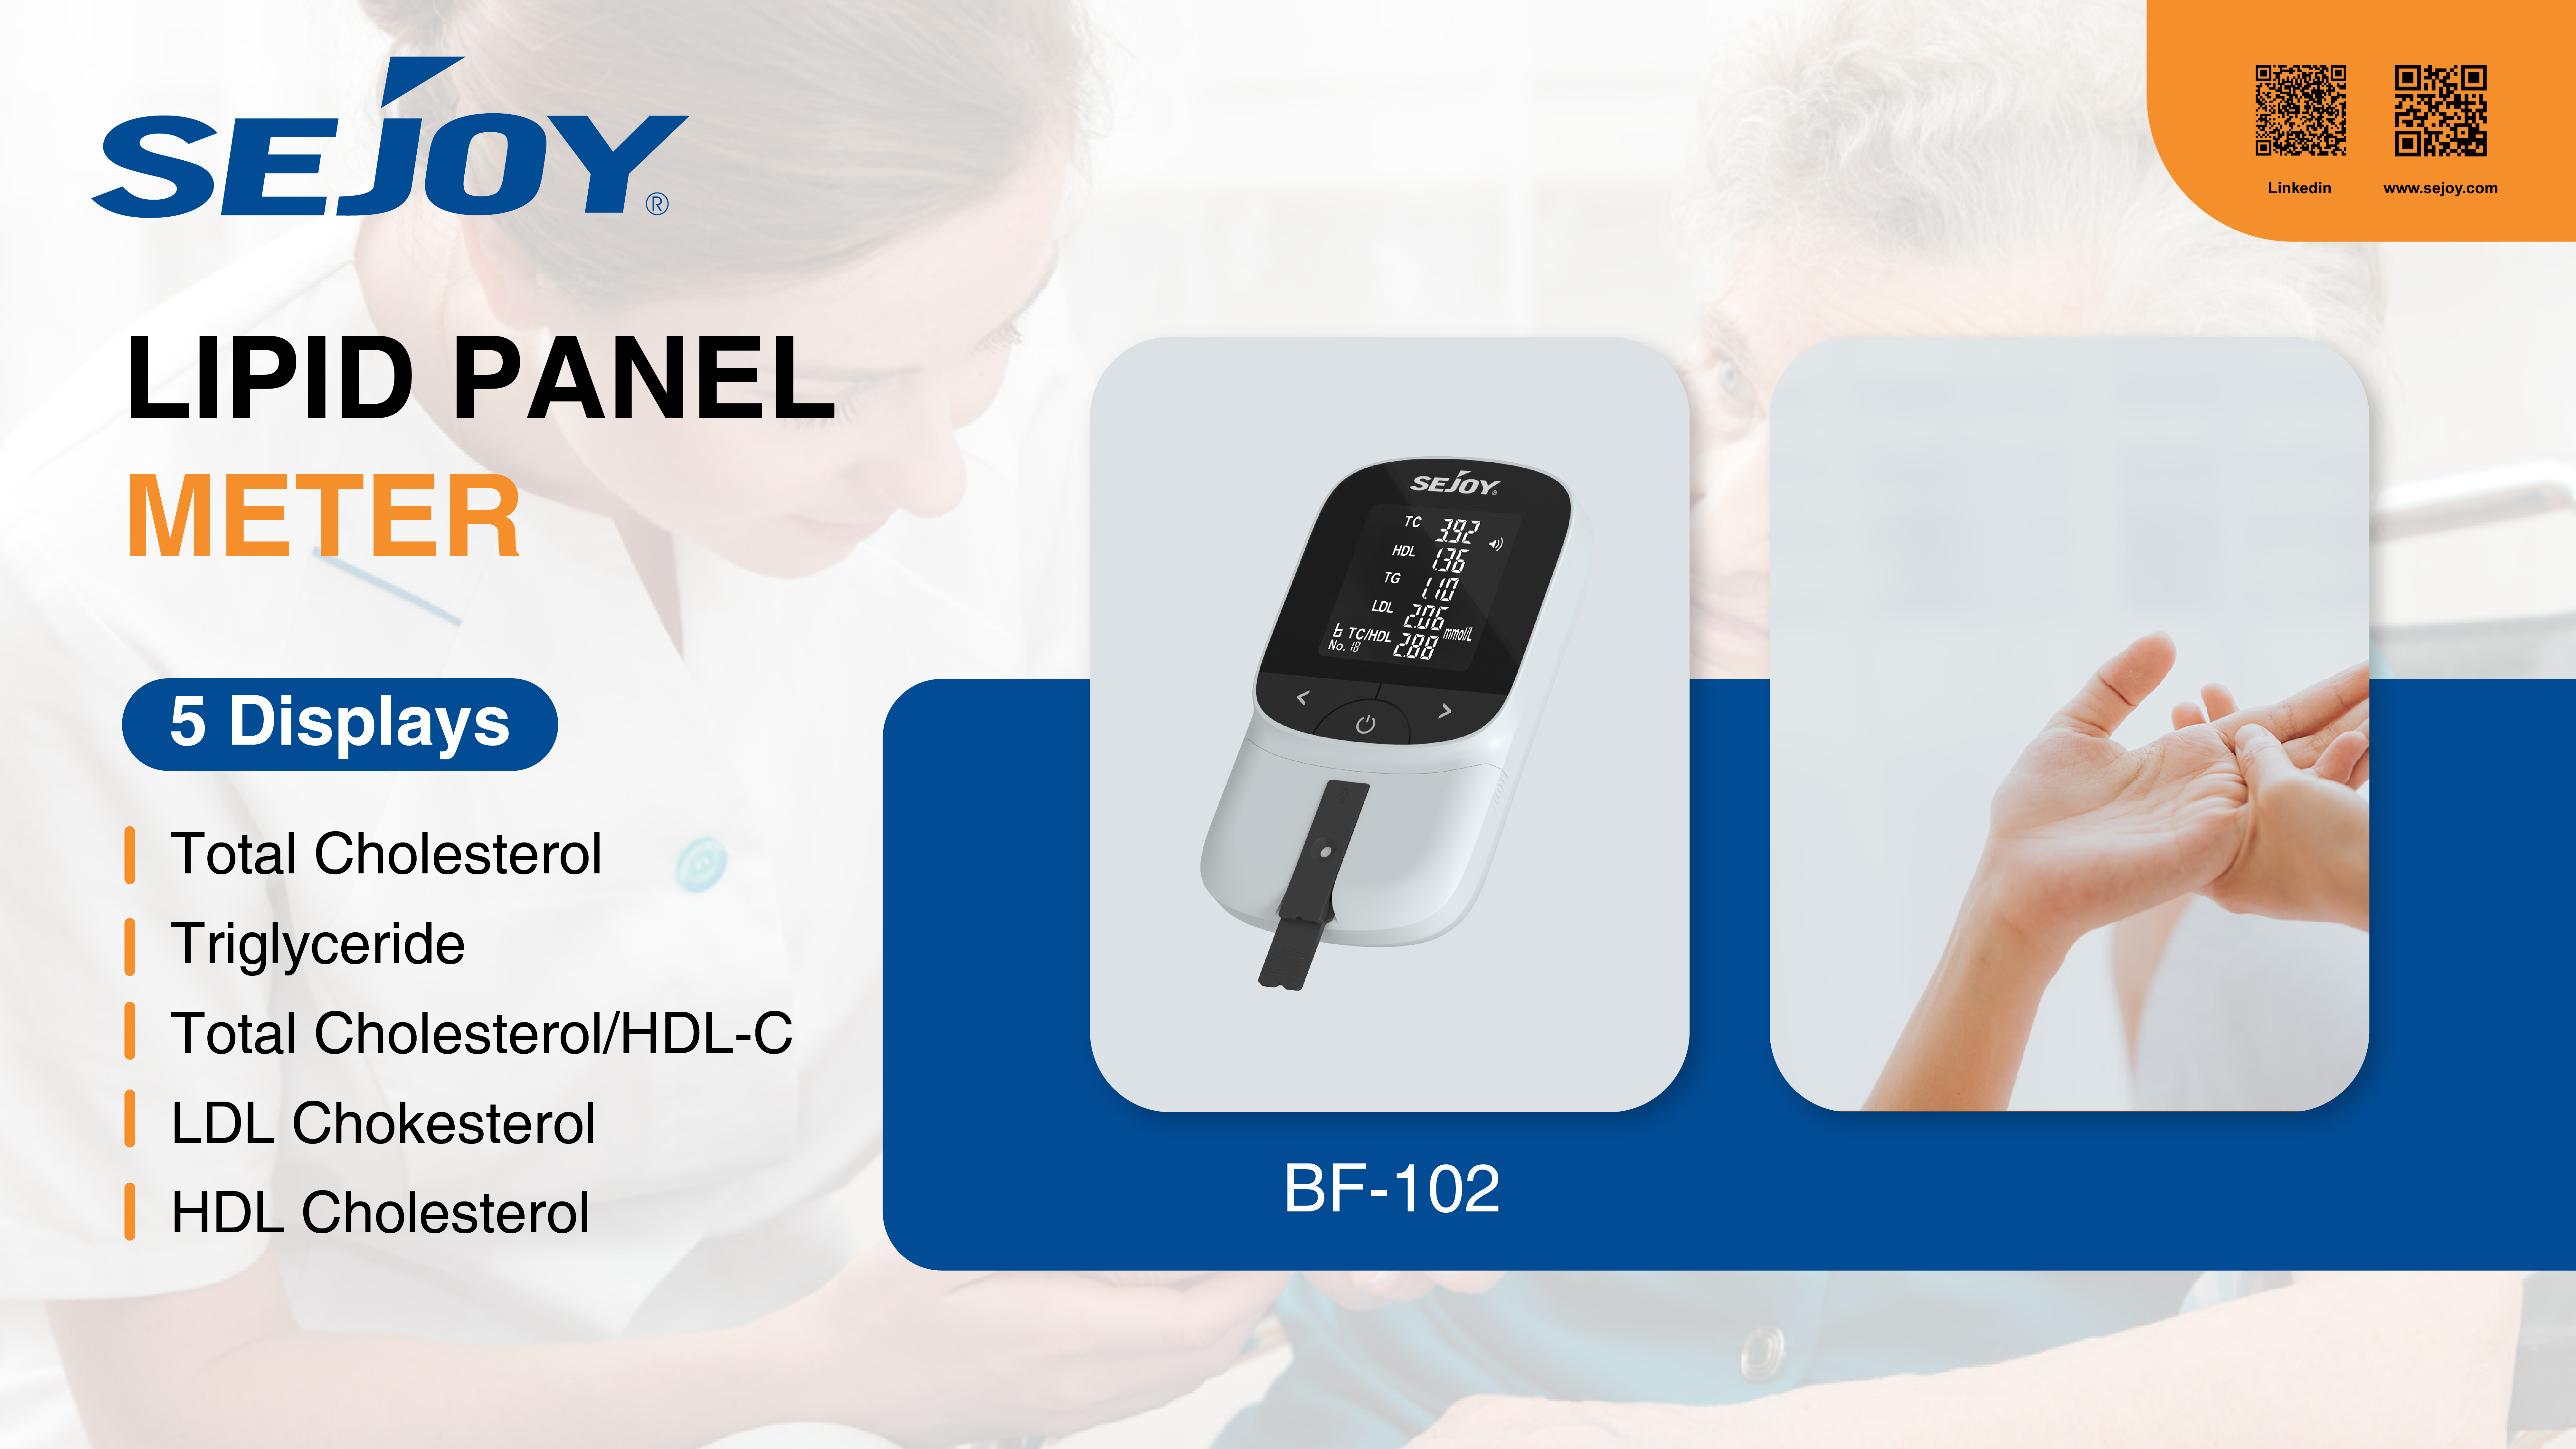 https://www.sejoy.com/lipid-panel-meter-bf-102-product/